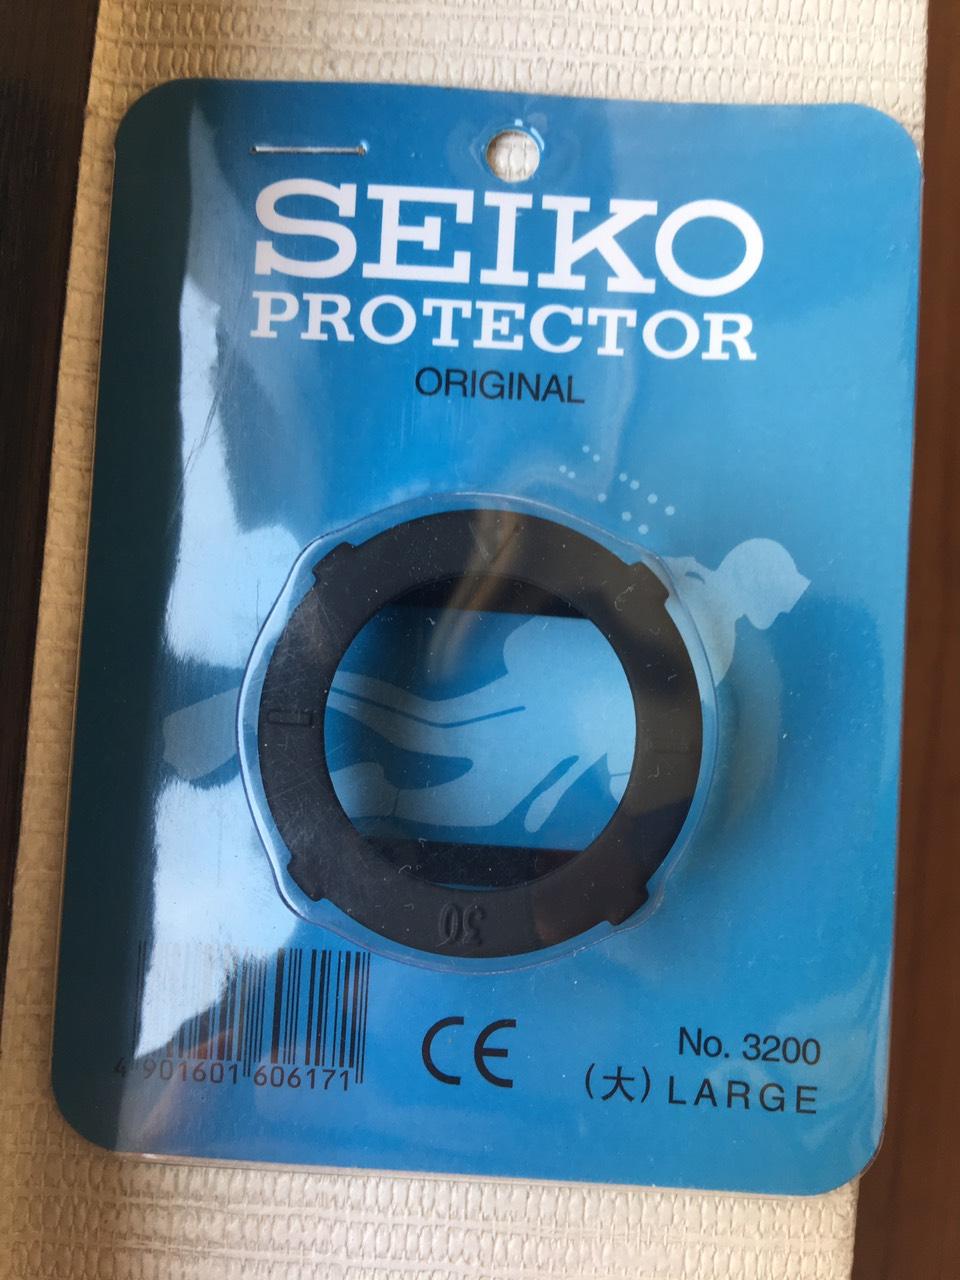 Rubber Protector Black for SKX007 SKX009 or SKX011 Large | Lazada PH